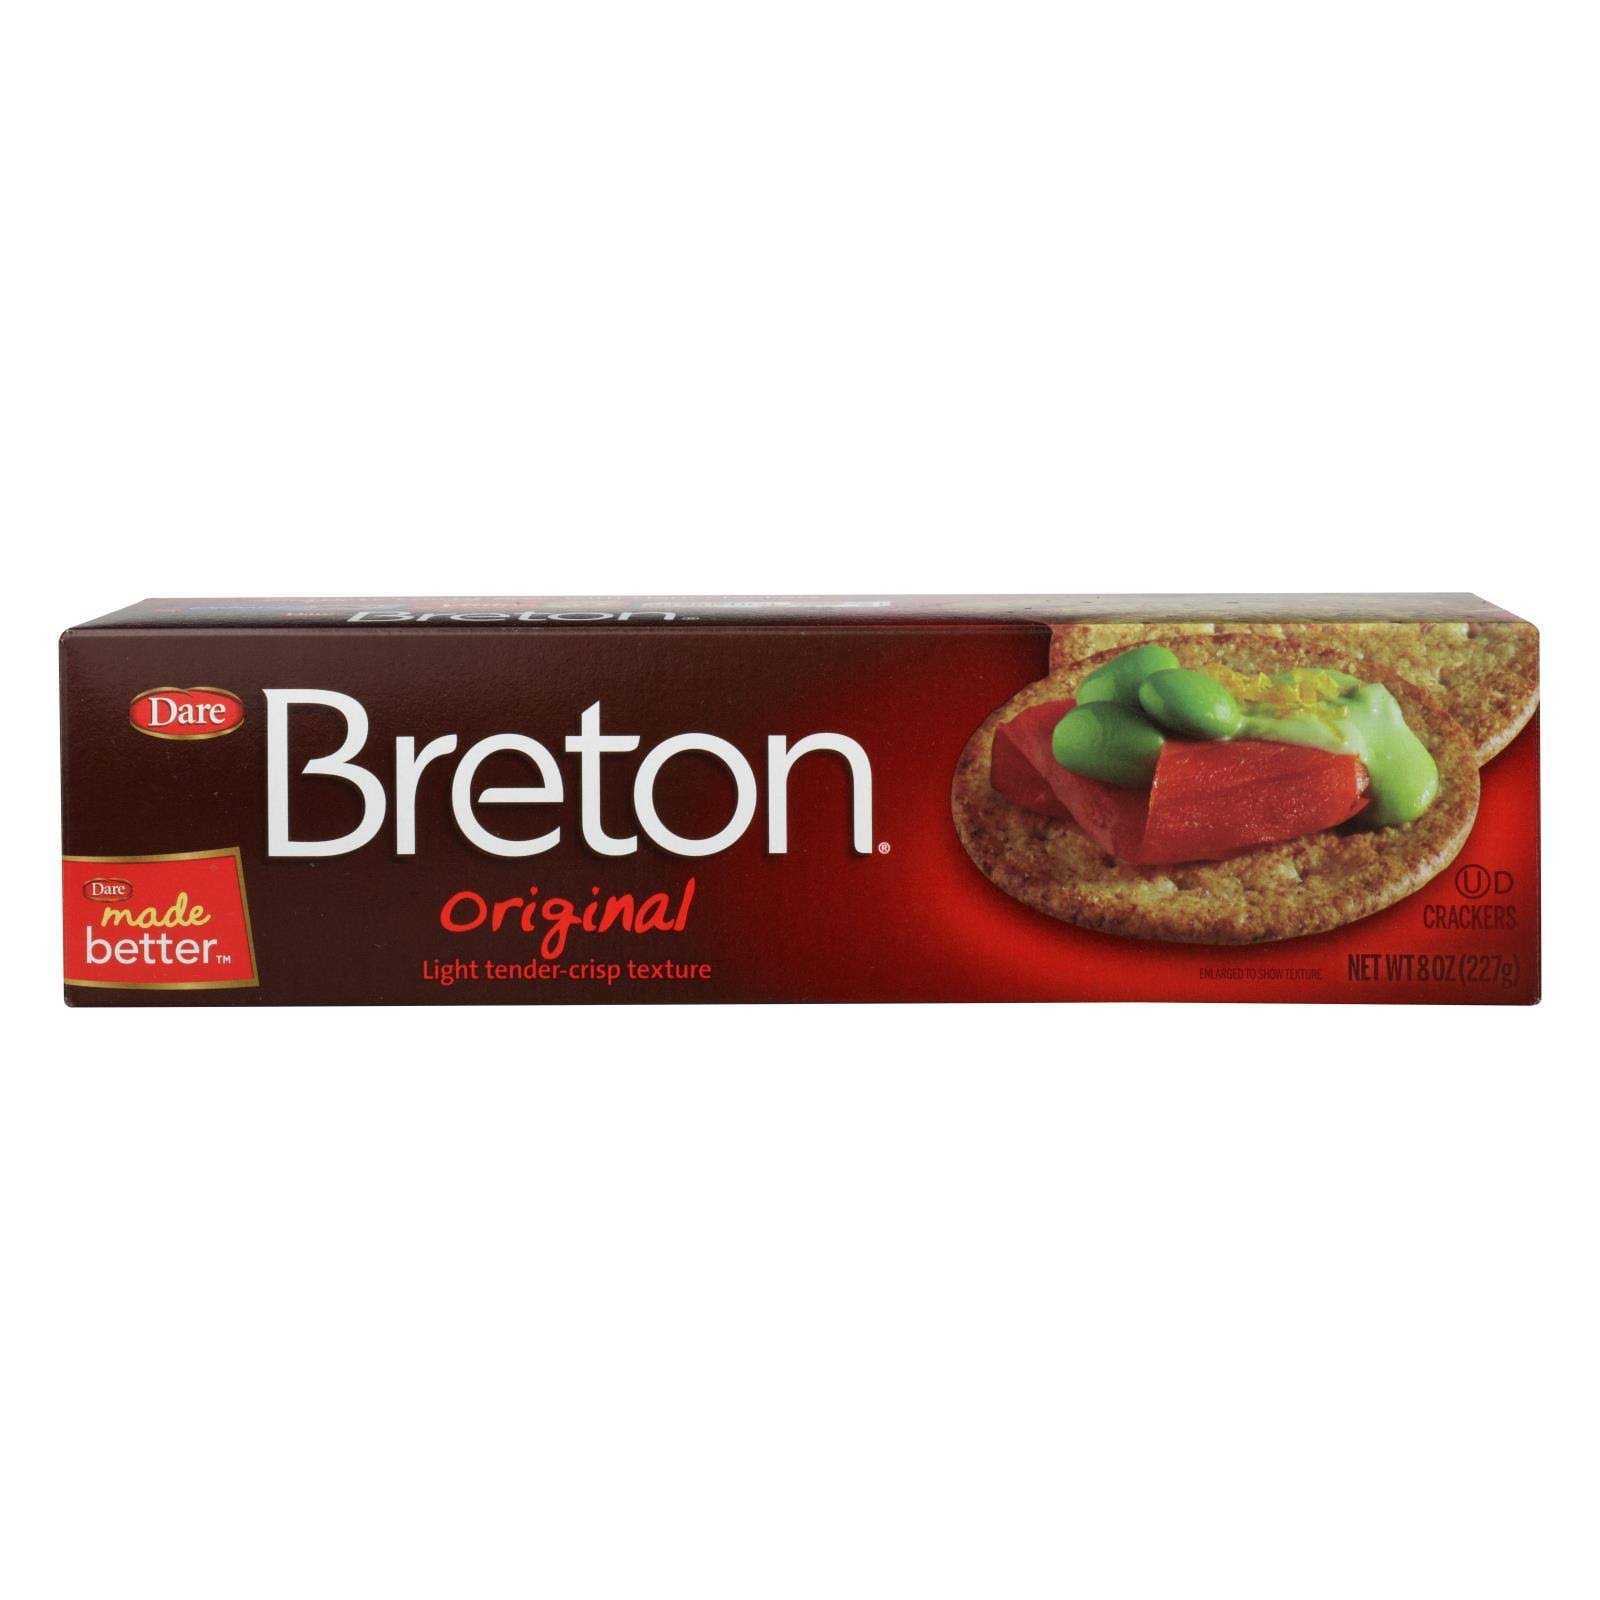 Dare Breton Original Crackers - 8oz